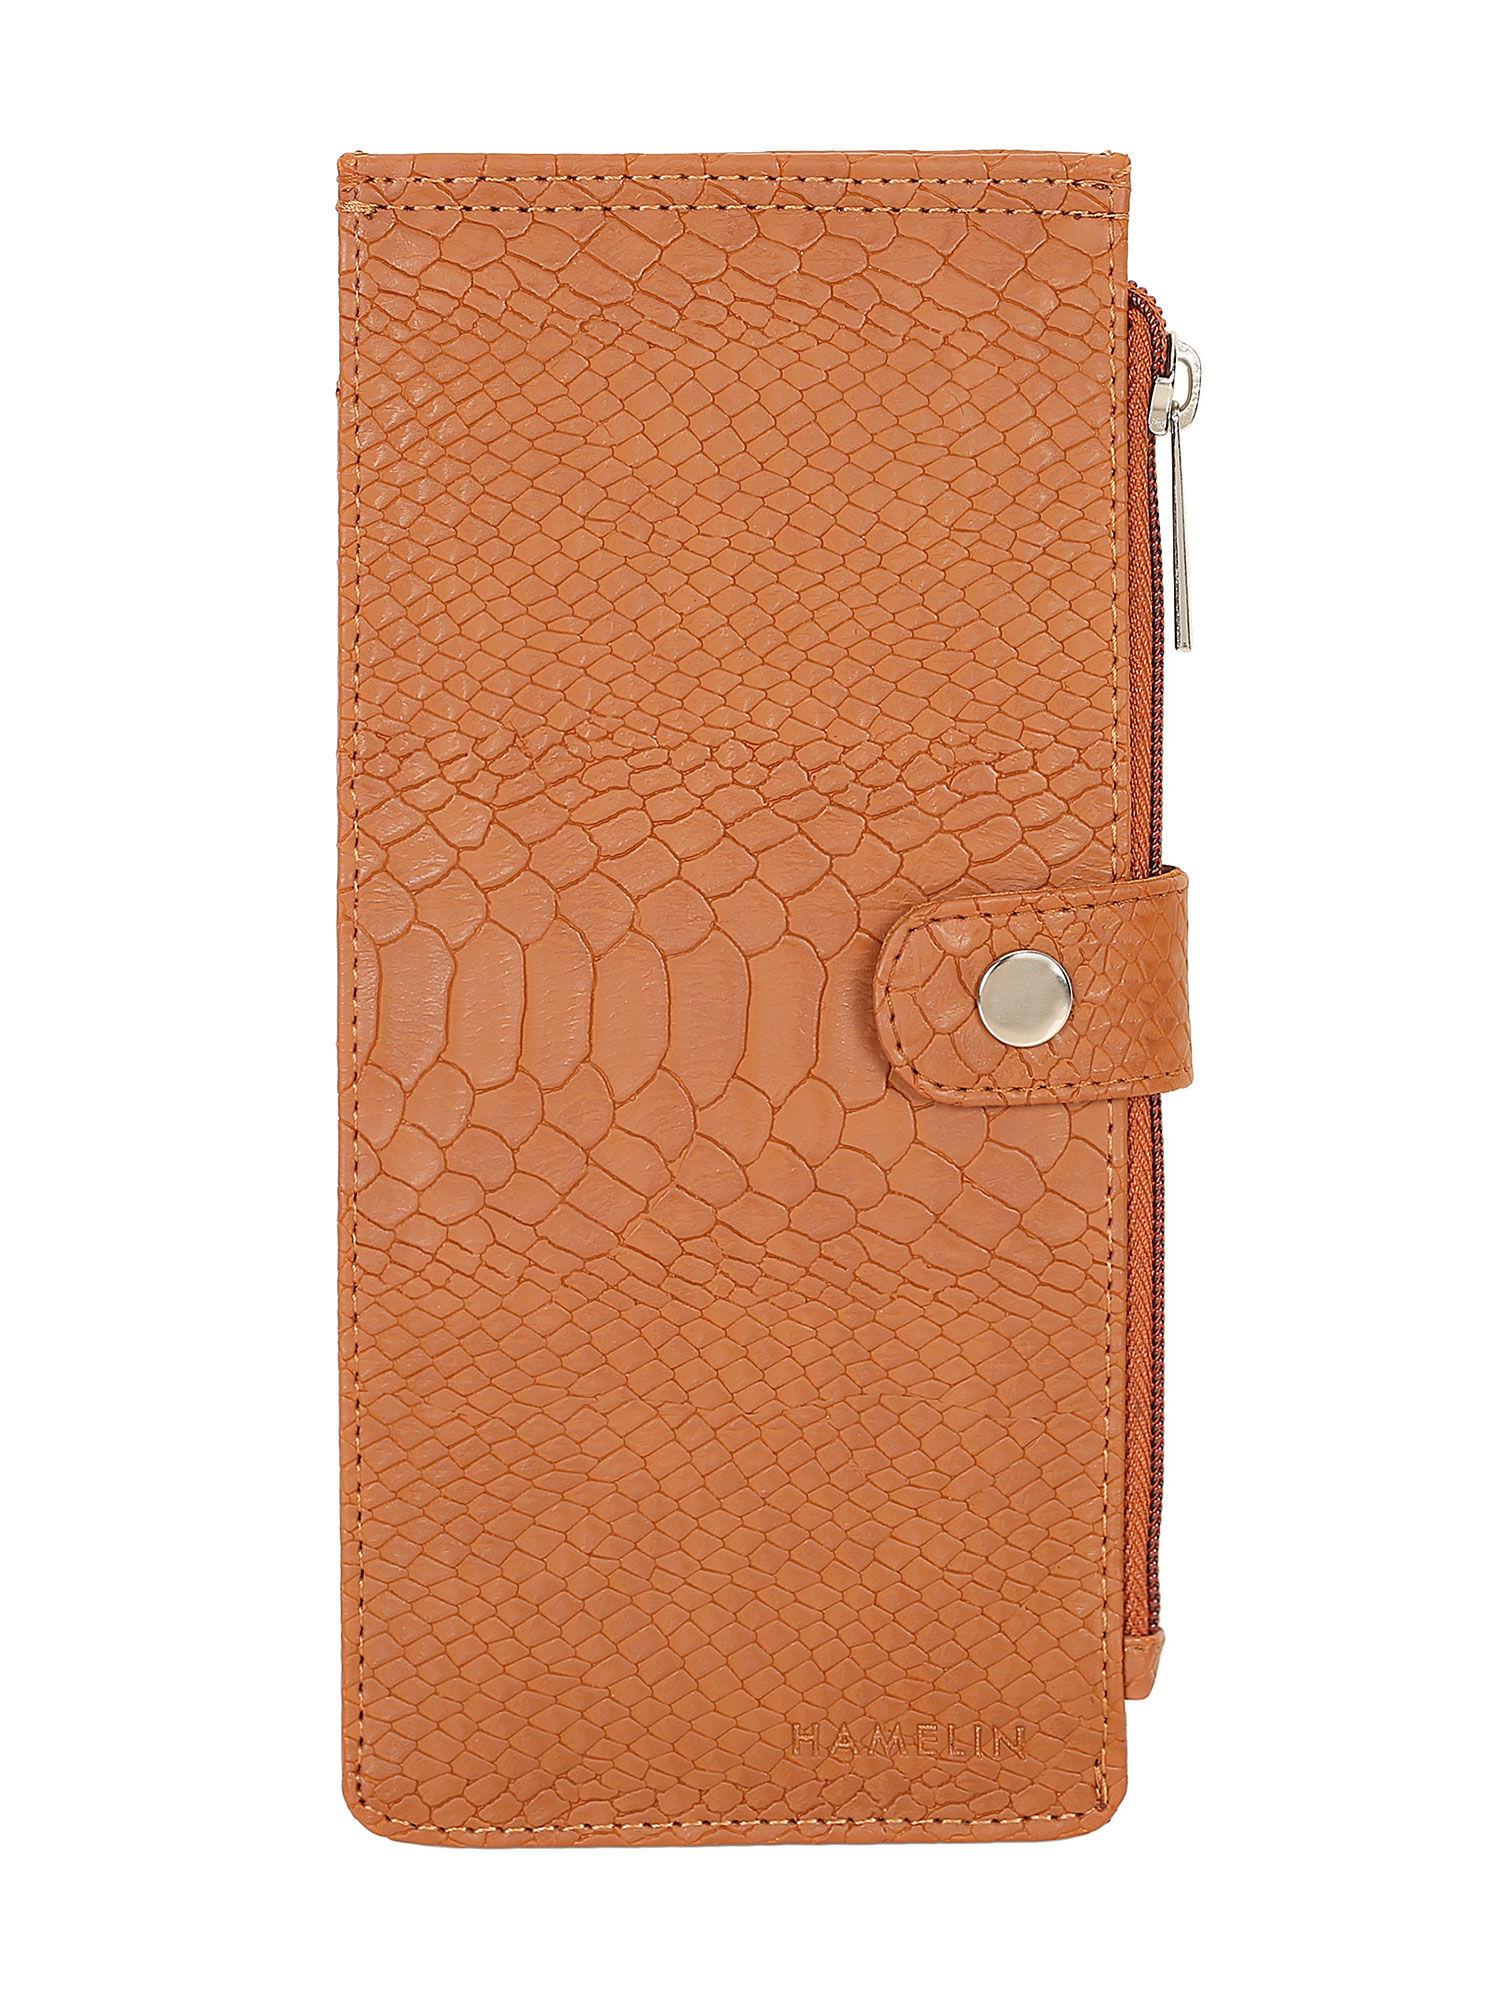 marshal wallet for women -tan croc